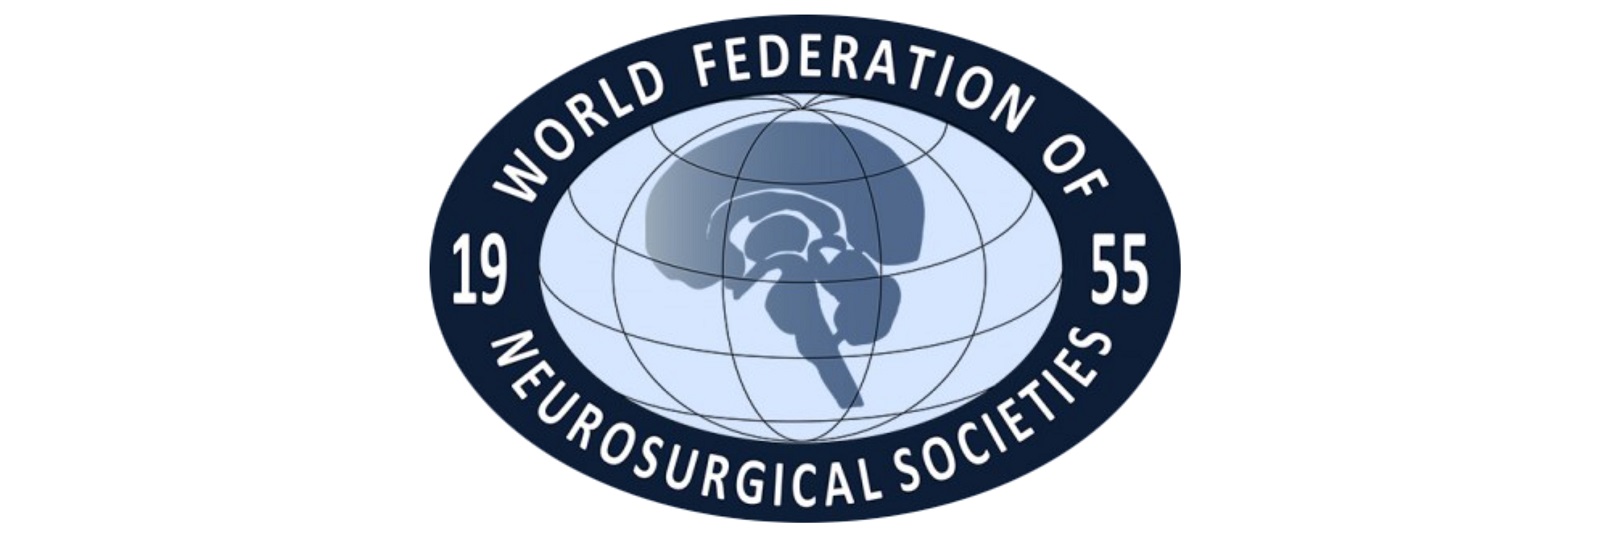 World Federation of Neurological Societies